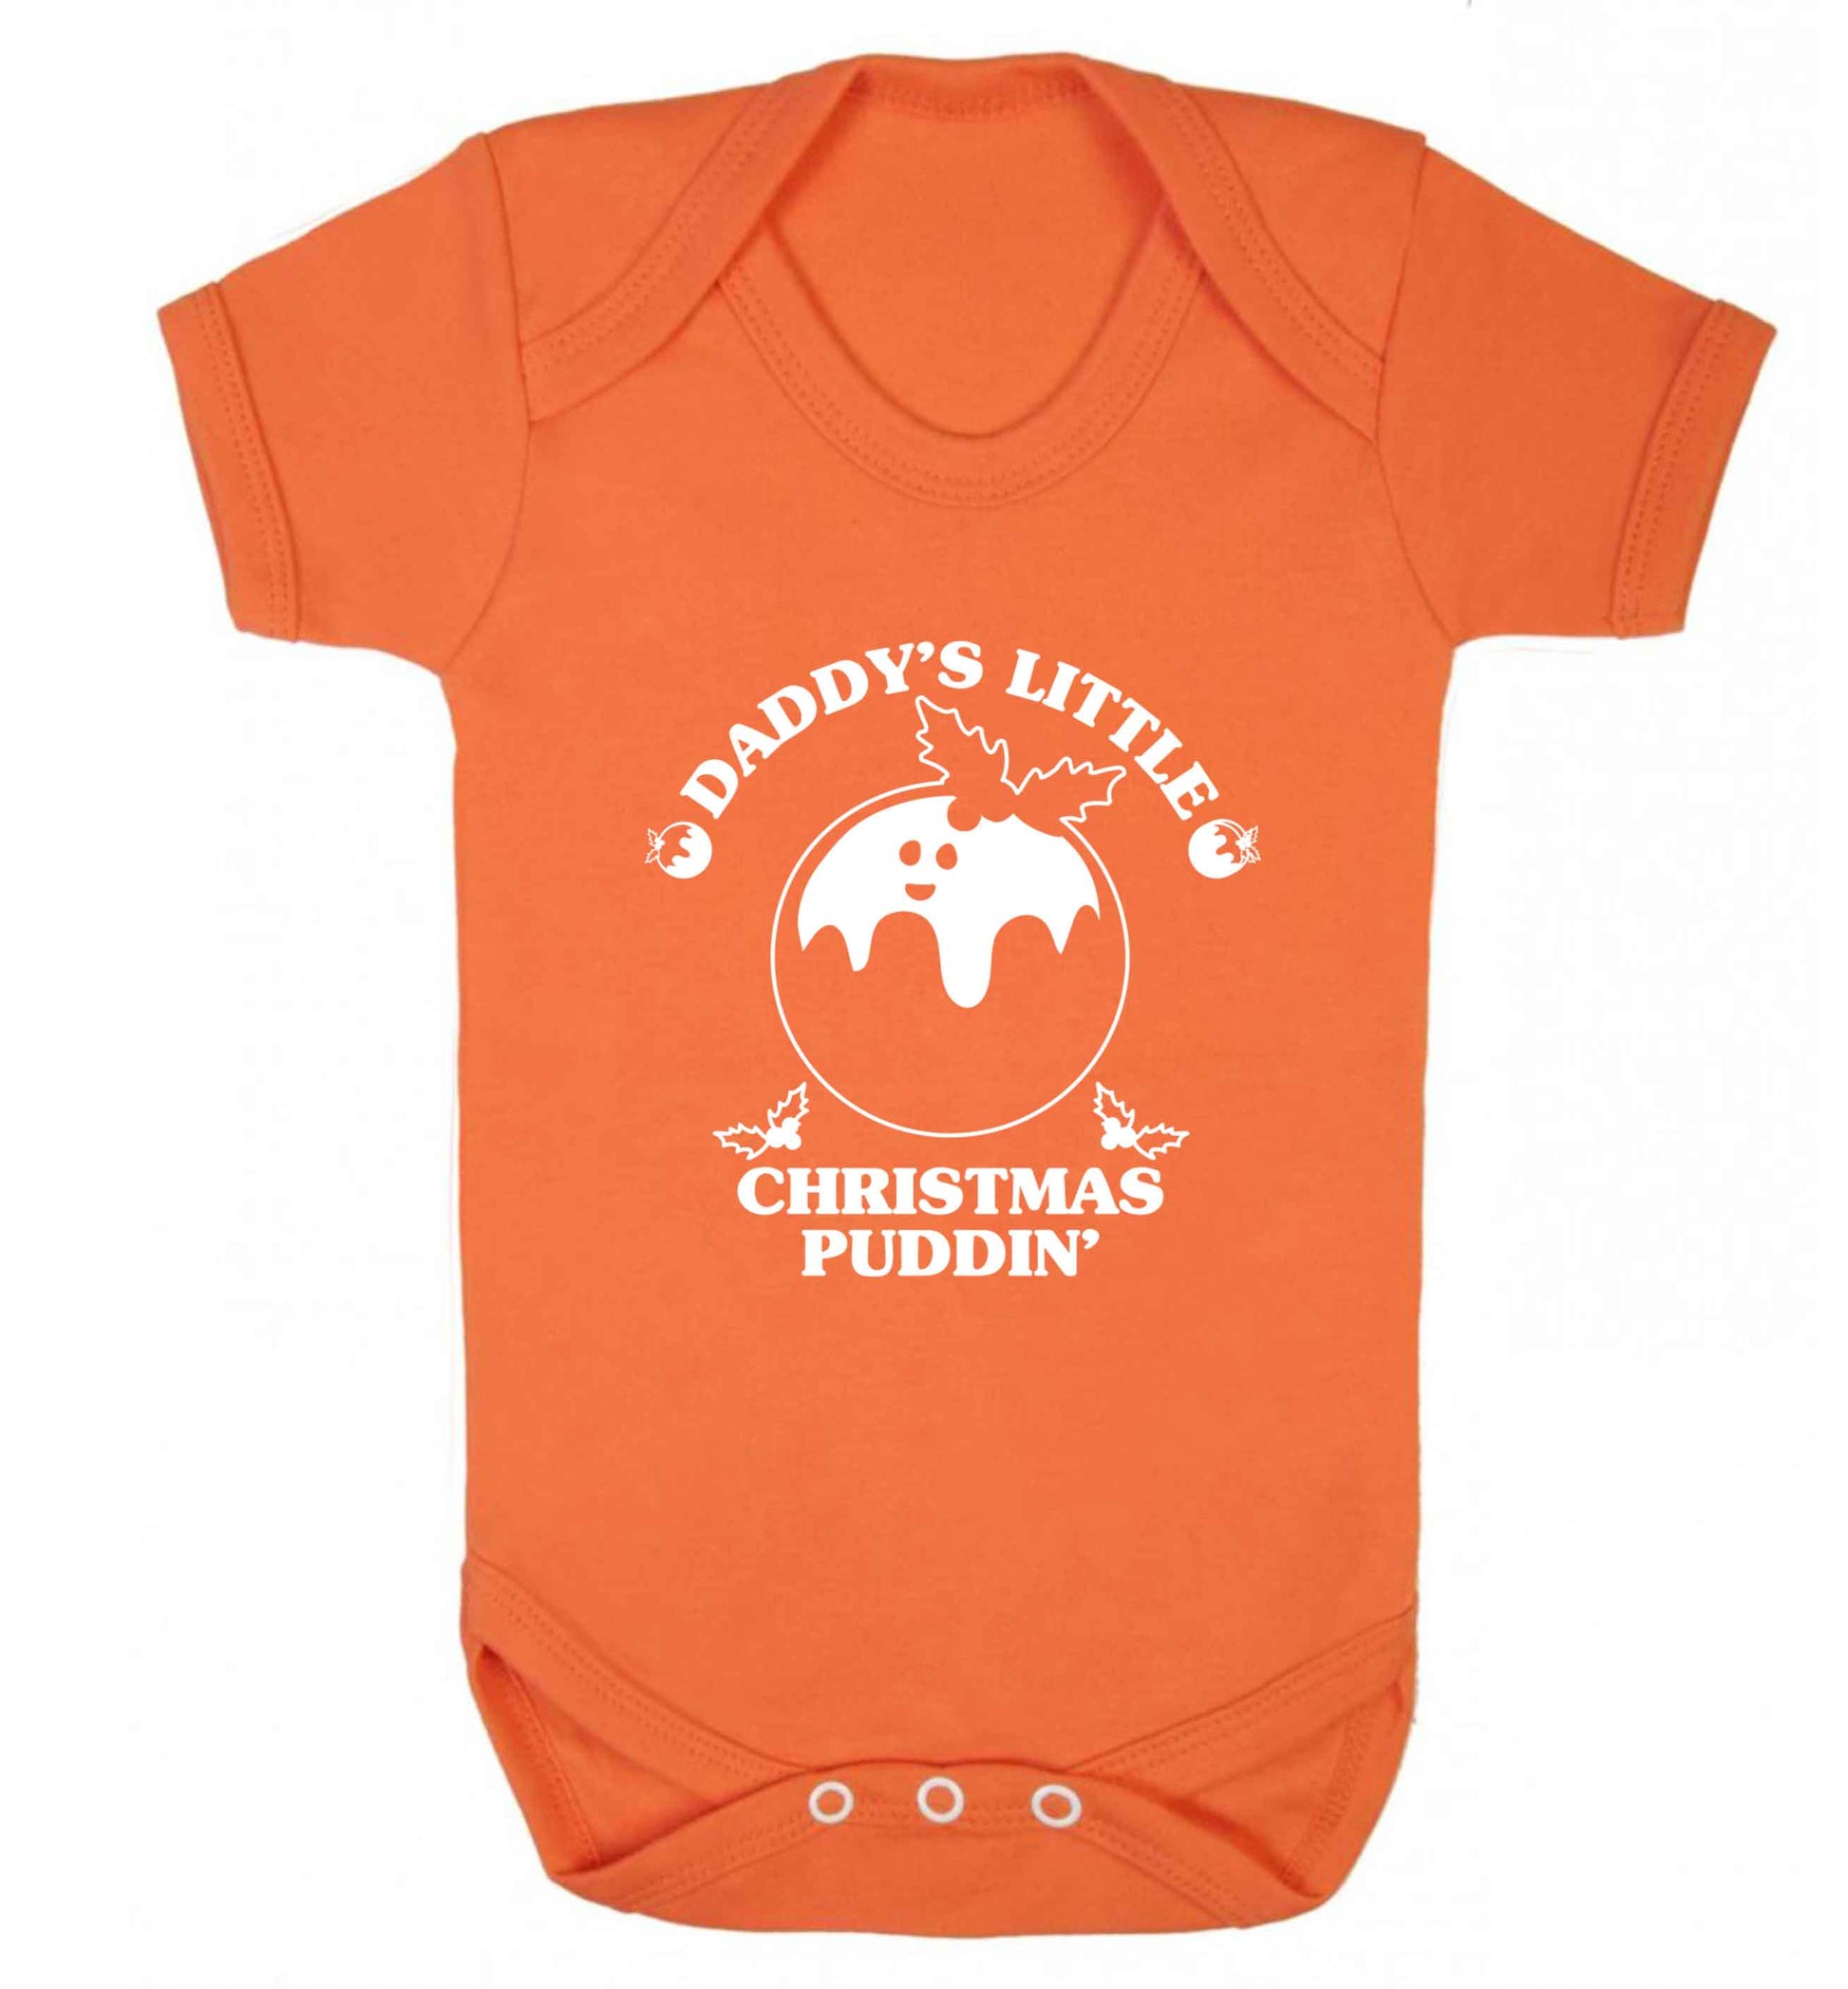 Daddy's little Christmas puddin' Baby Vest orange 18-24 months